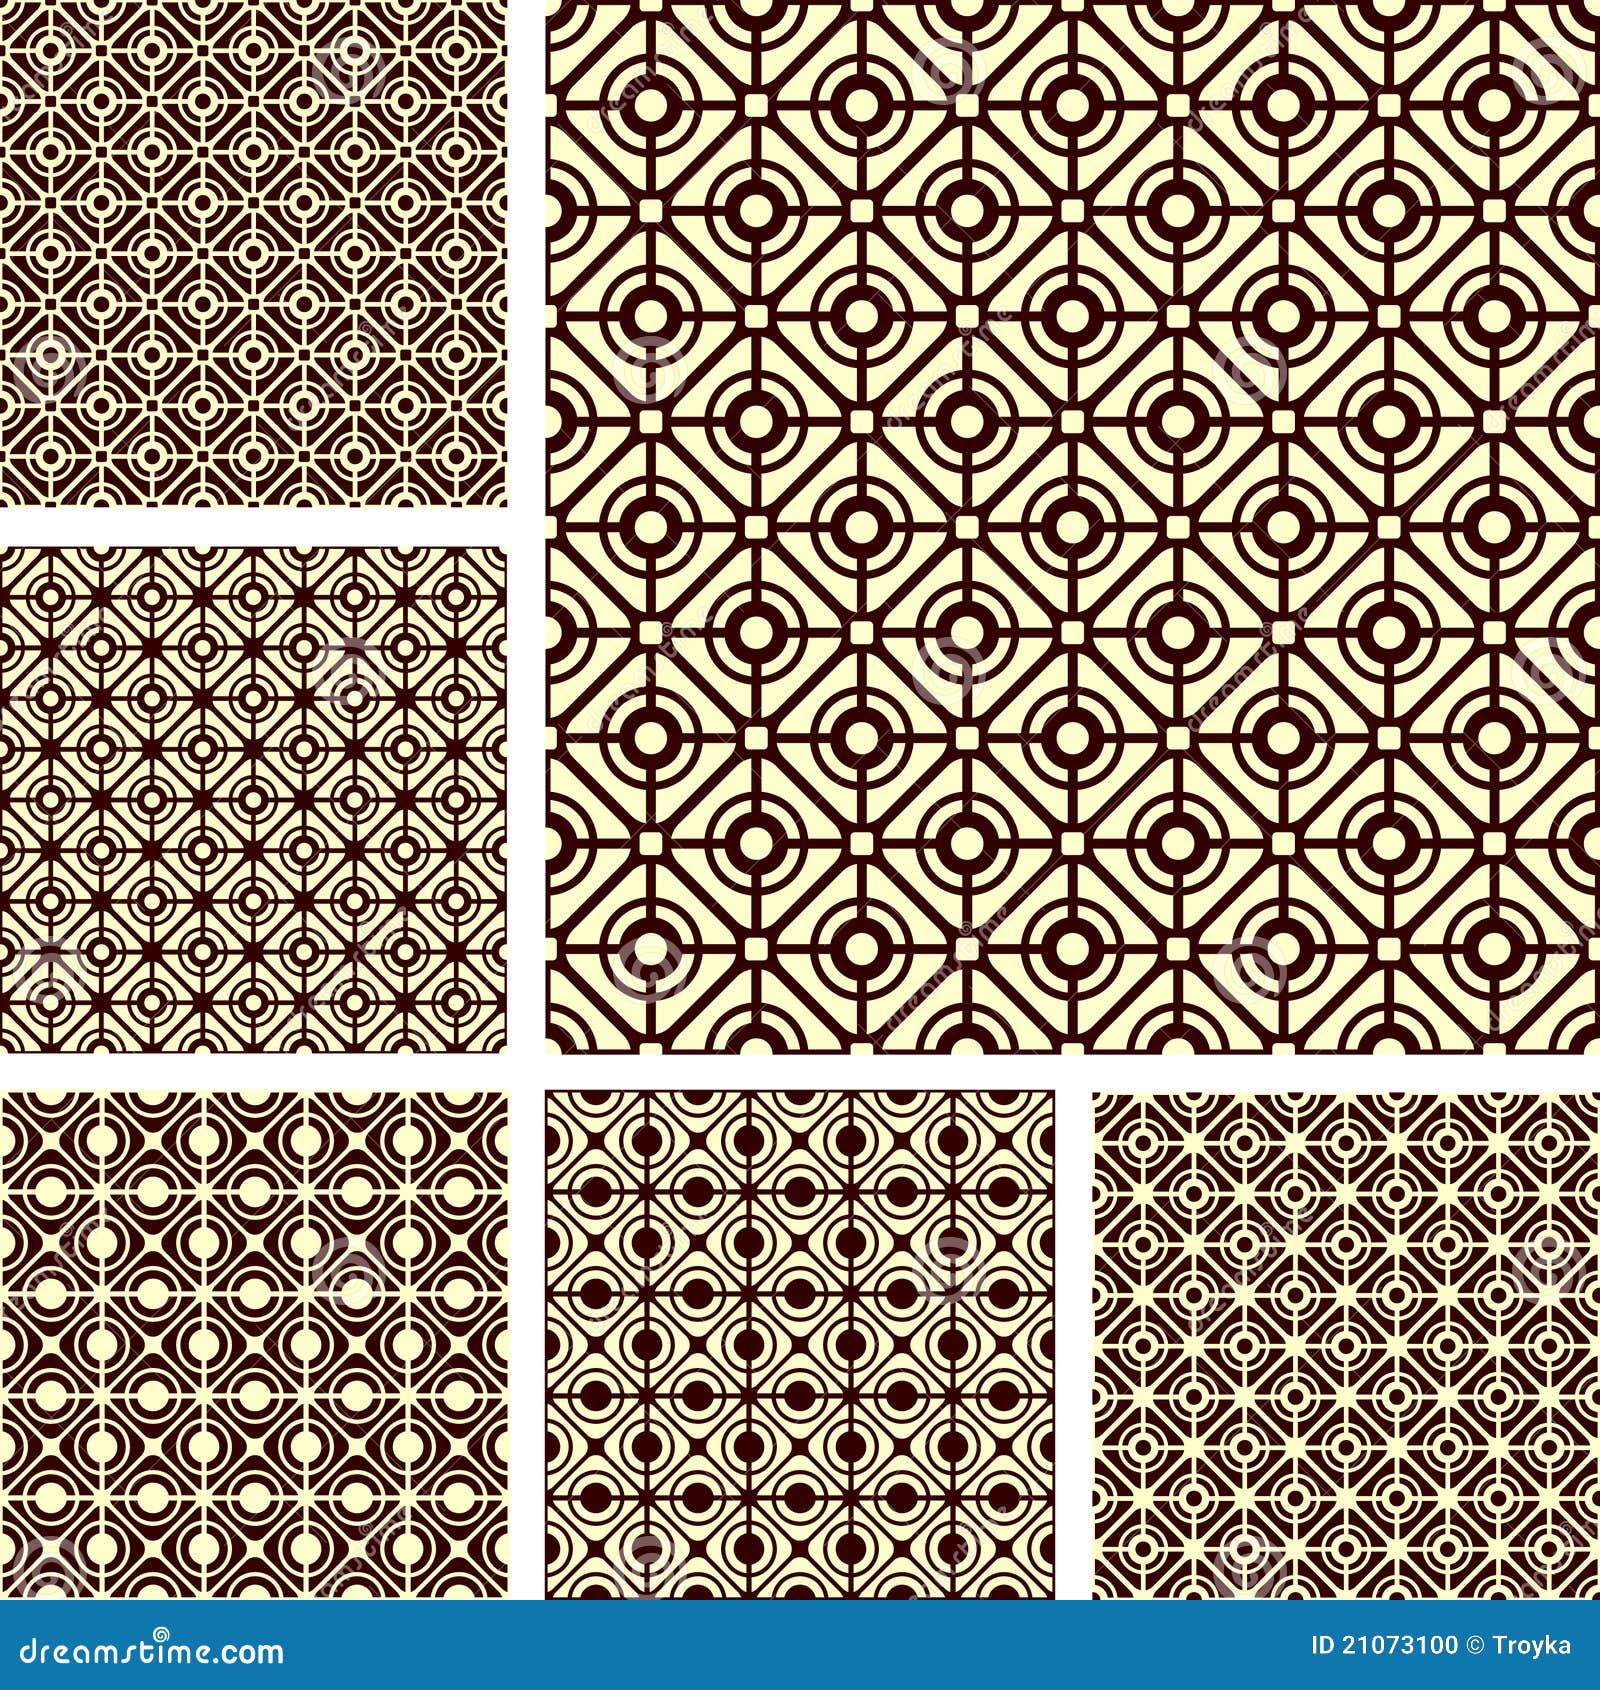 seamless geometric latticed patterns set.